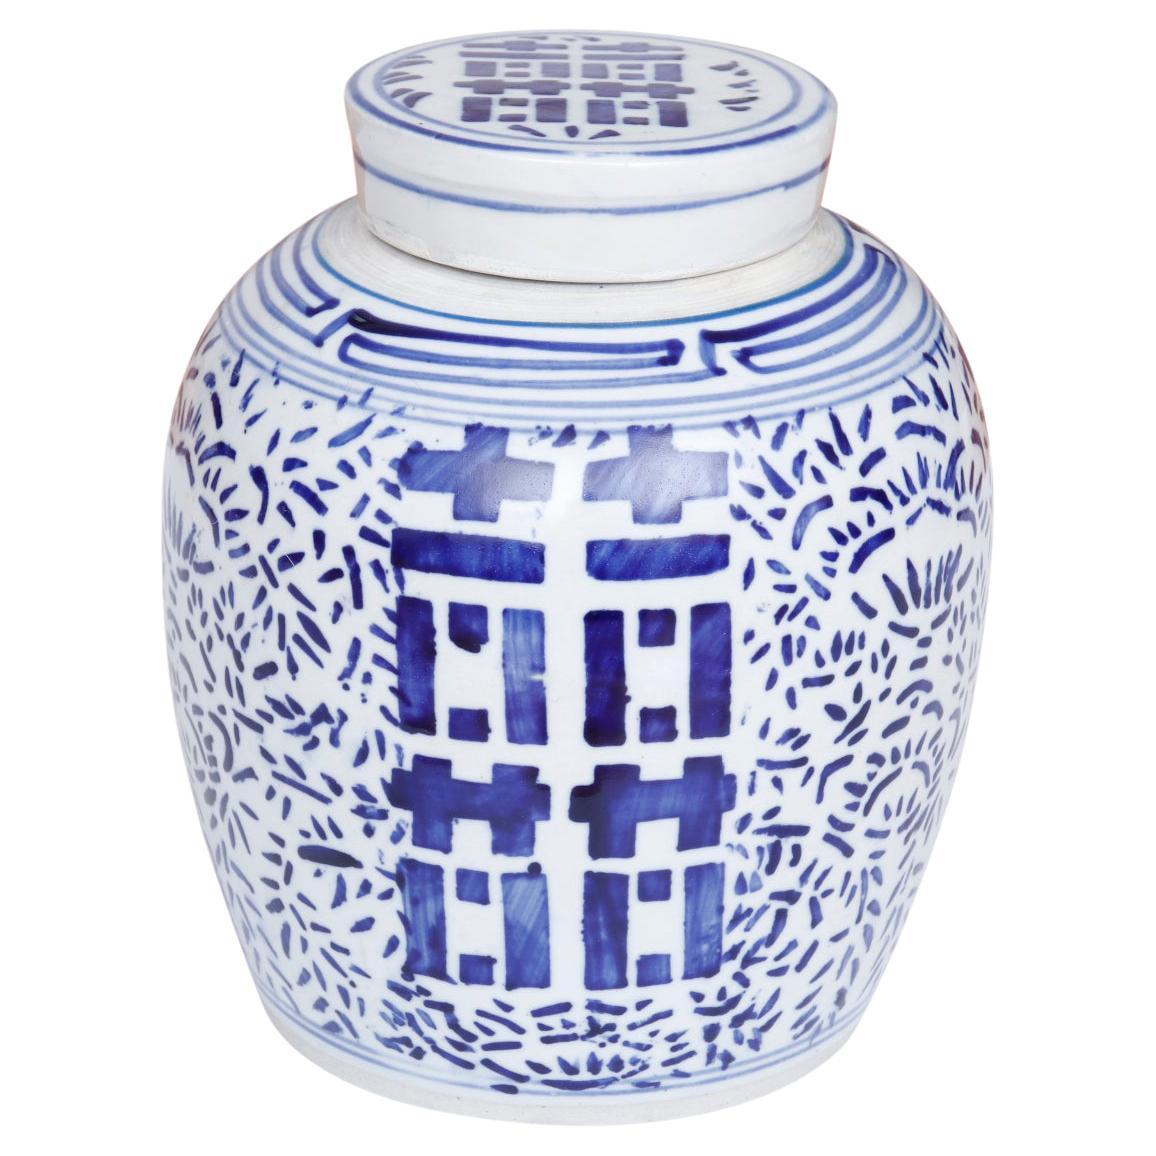 Fine China Hand Painted flower Blue and White Porcelain vase & Jar 